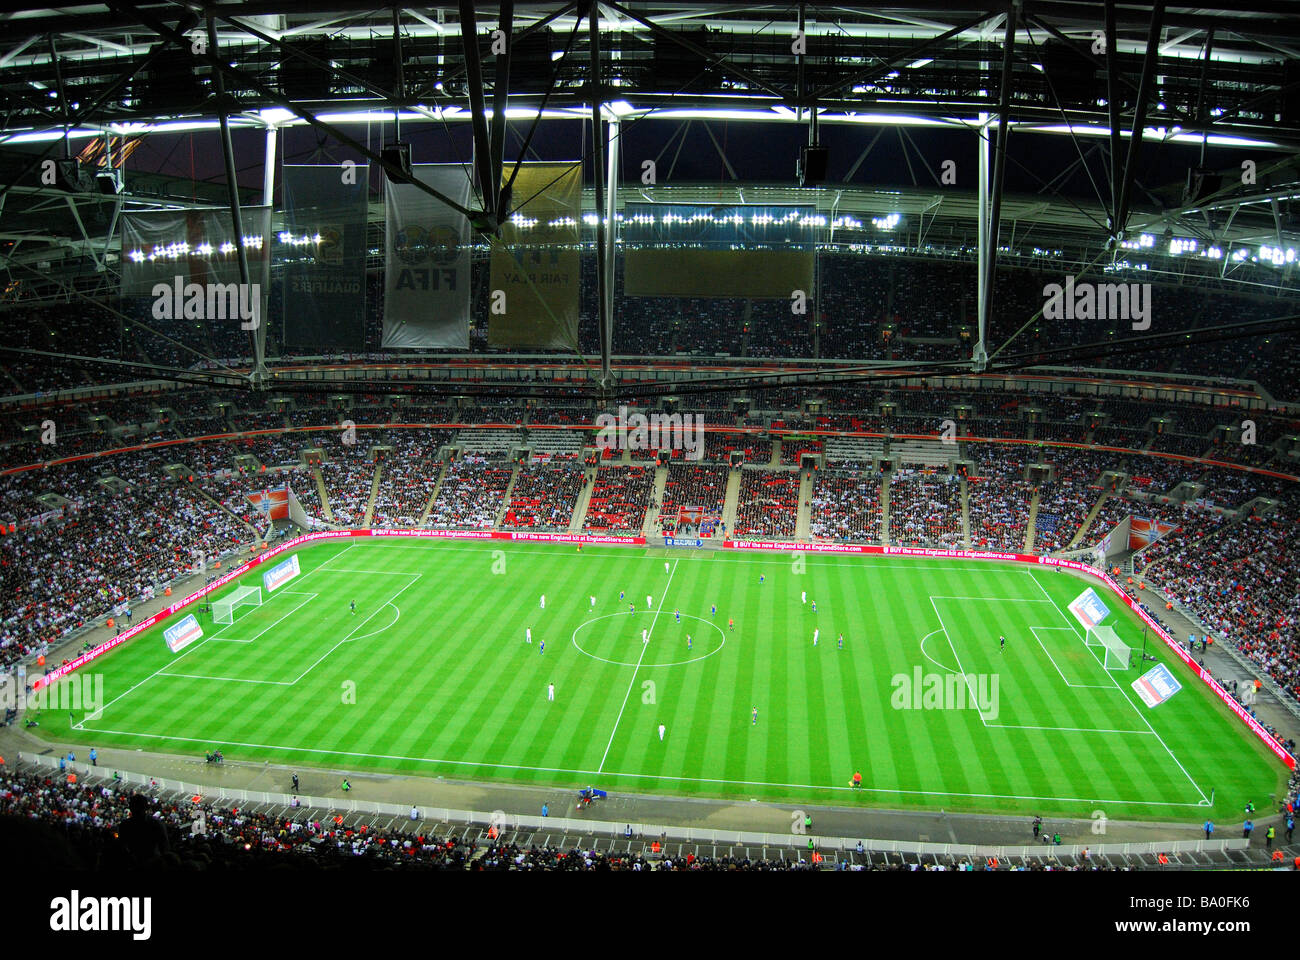 England playing at Wembley Football Stadium at night, Wembley, London, England, United Kingdom Stock Photo